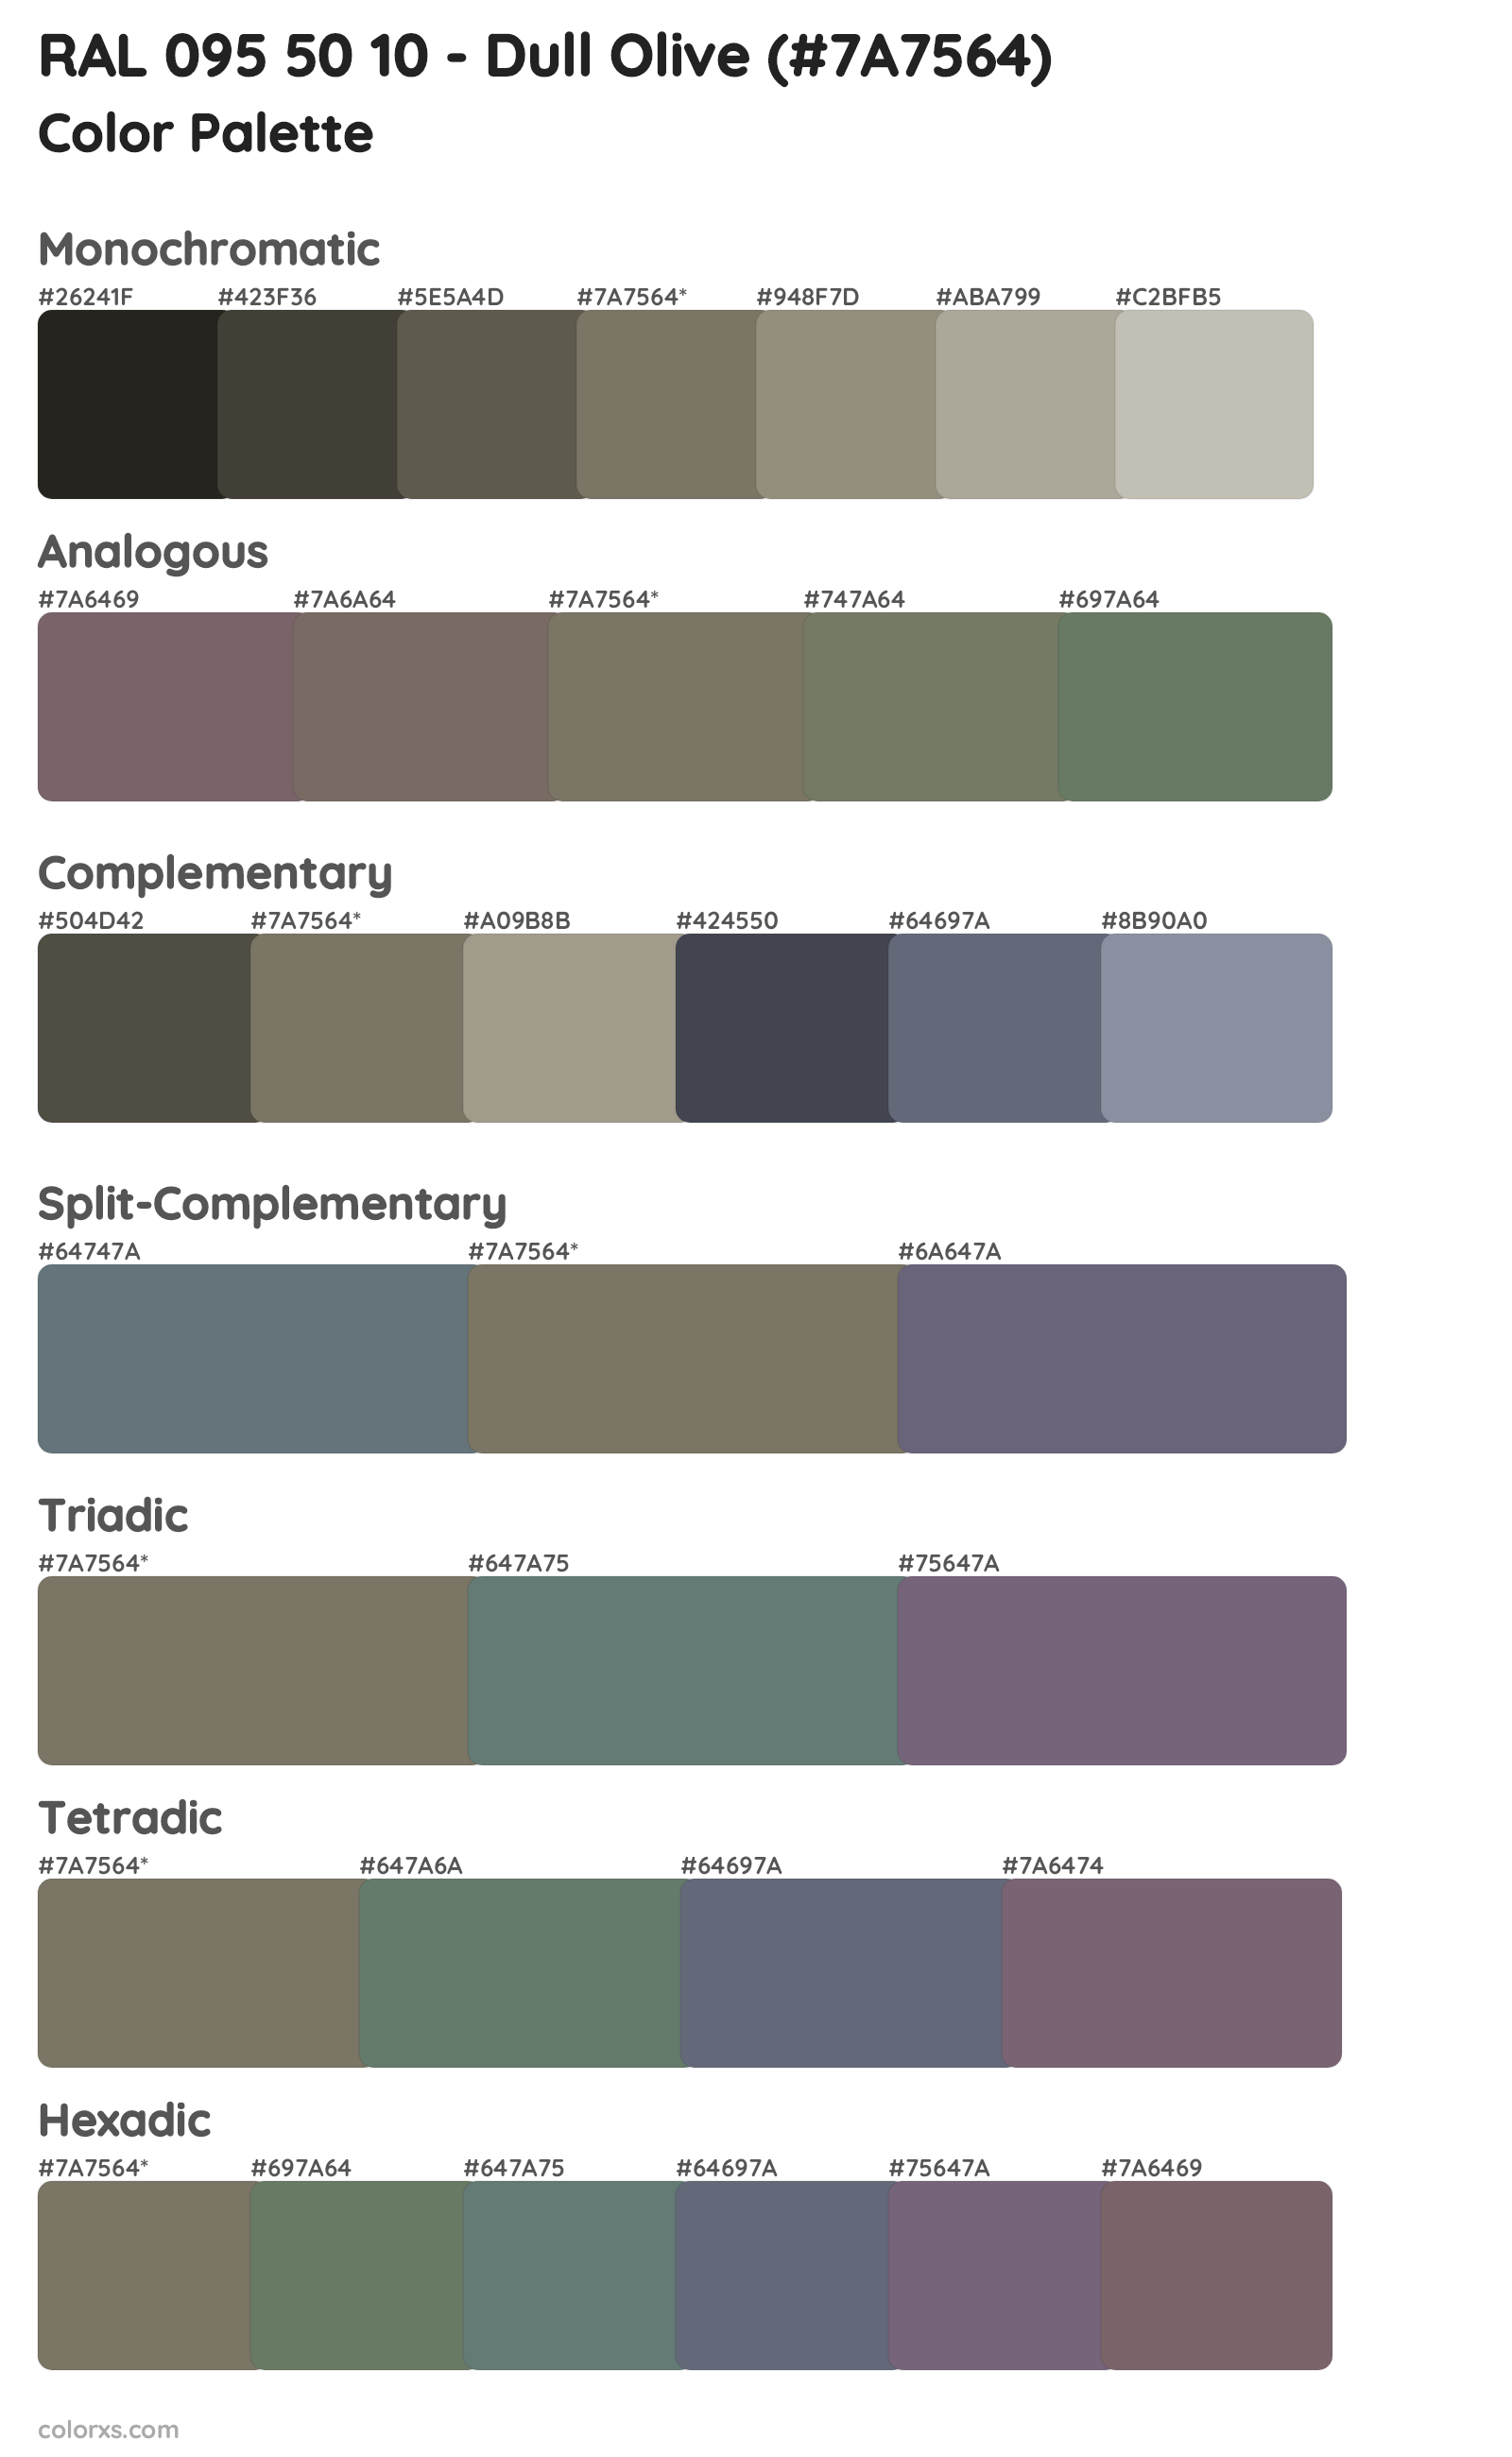 RAL 095 50 10 - Dull Olive Color Scheme Palettes